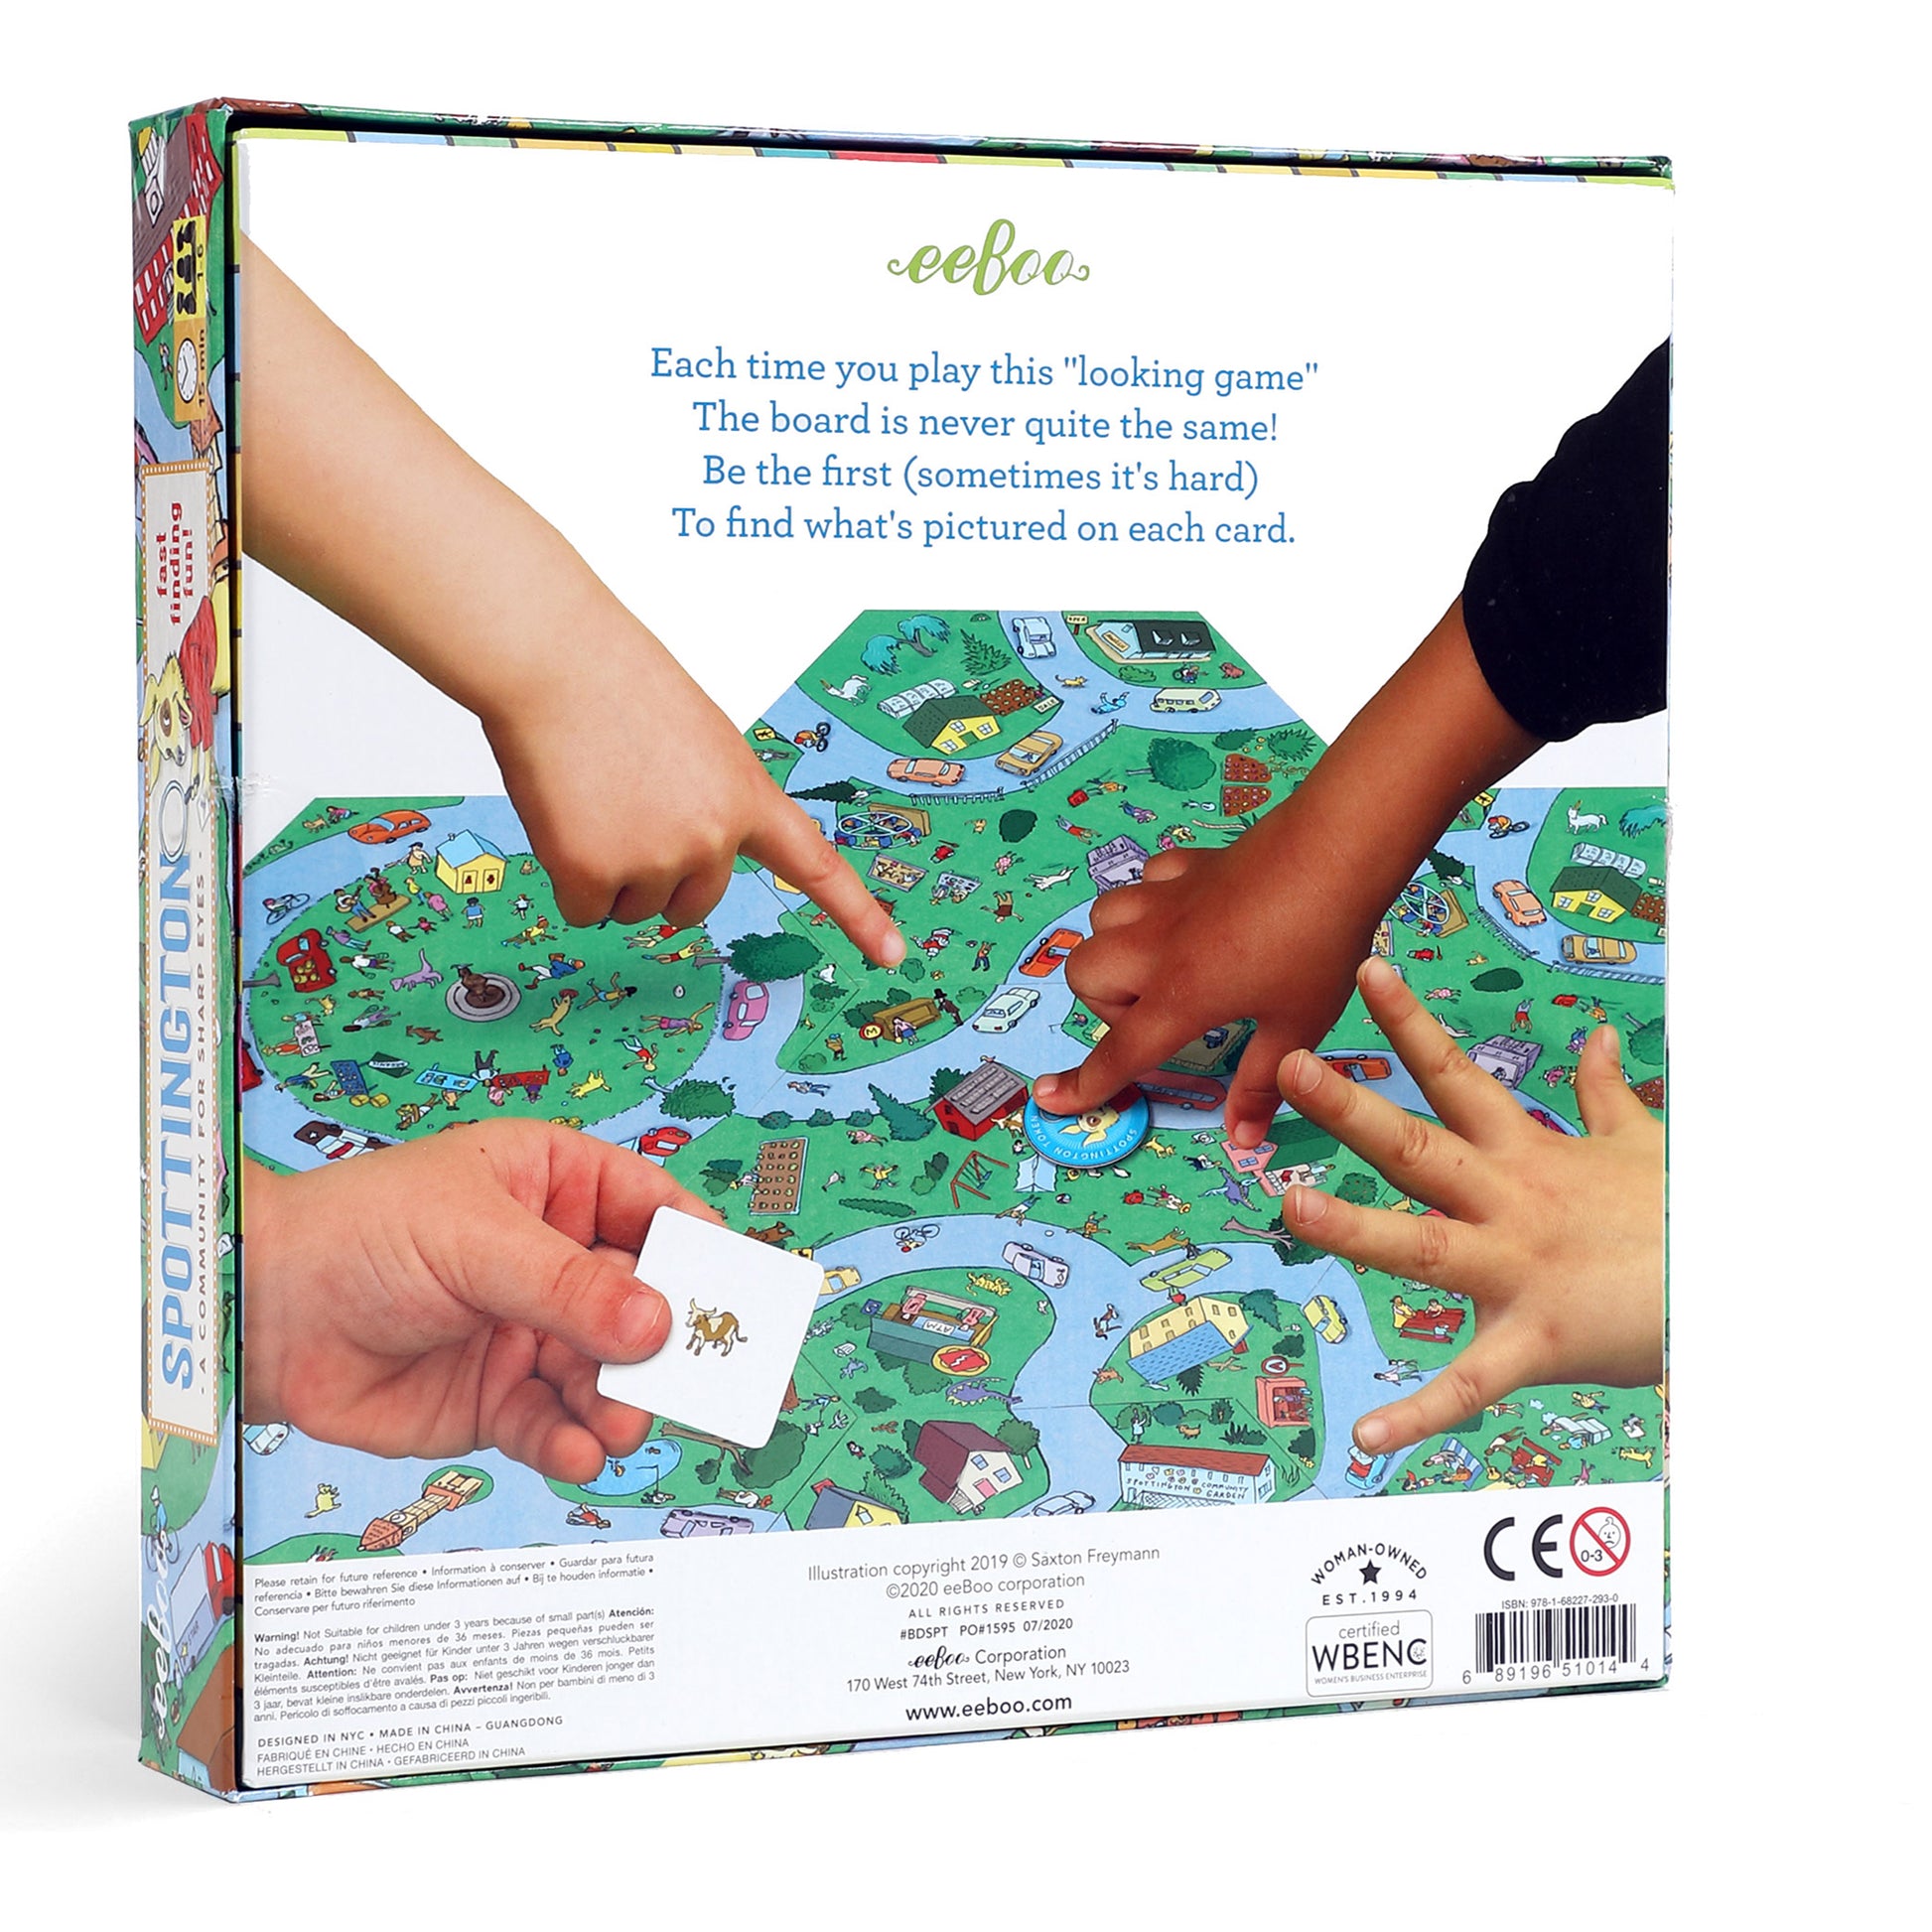 Spottington Seek and Find Award Winning Board Game eeBoo for Kids Ages 5+